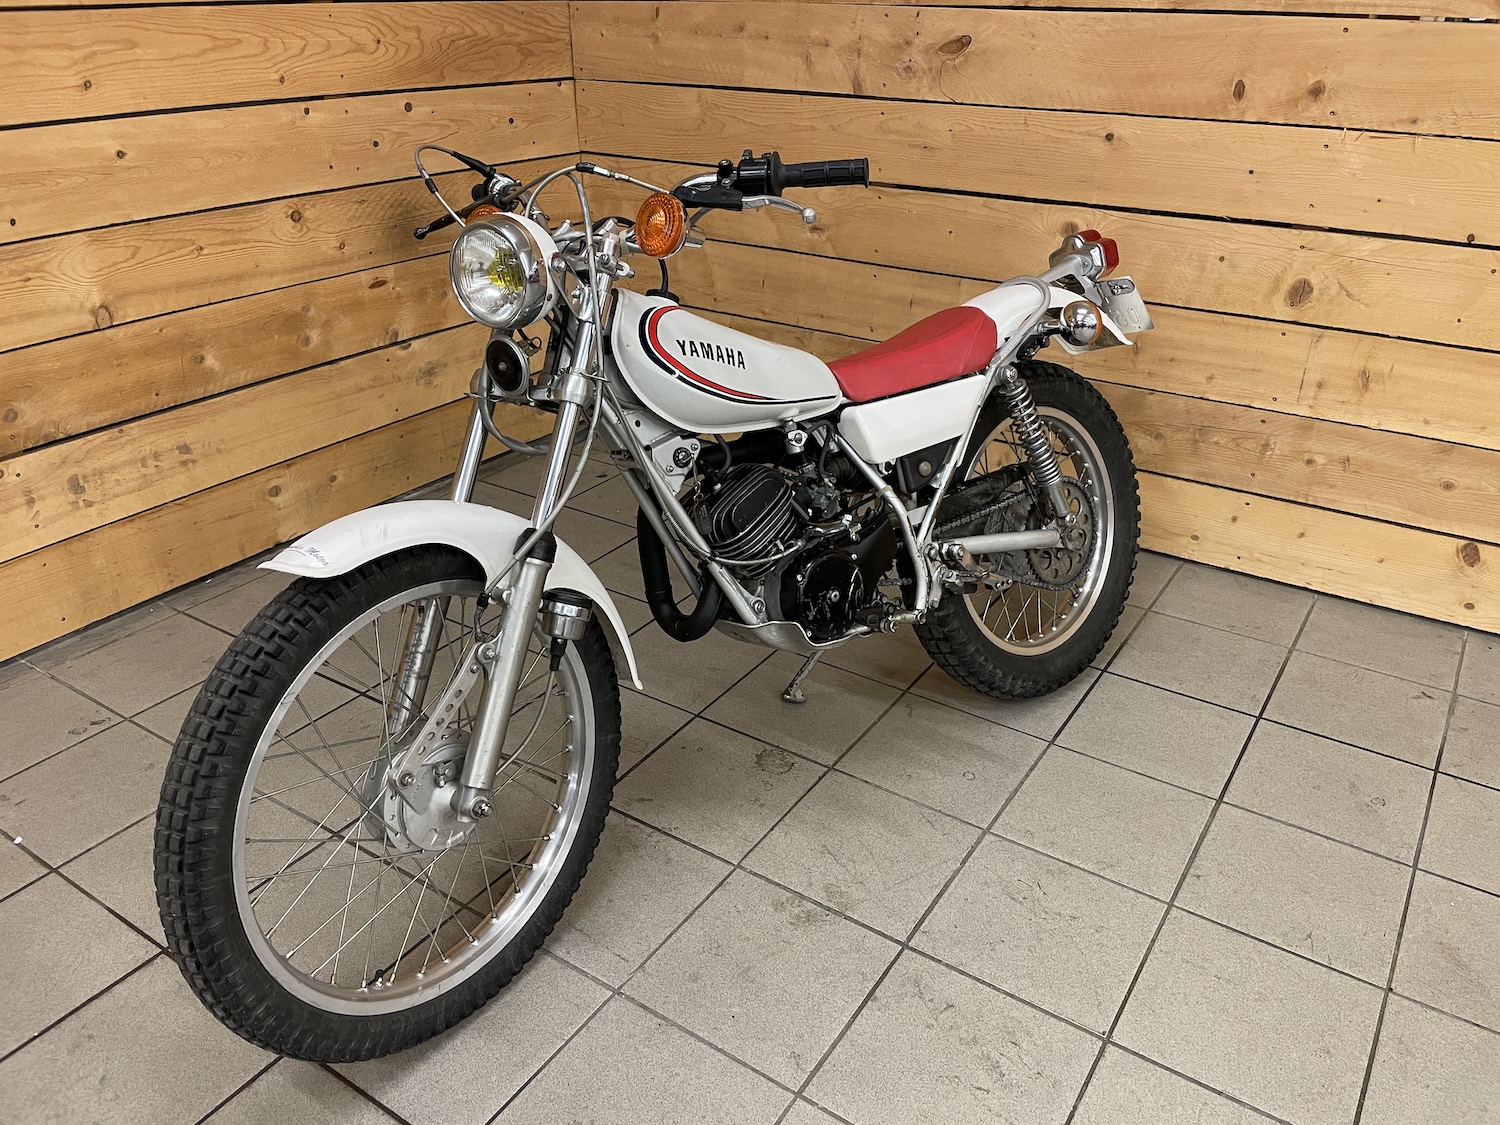 Yamaha_TY125_cezanne_classic_motorcycle-113.jpg